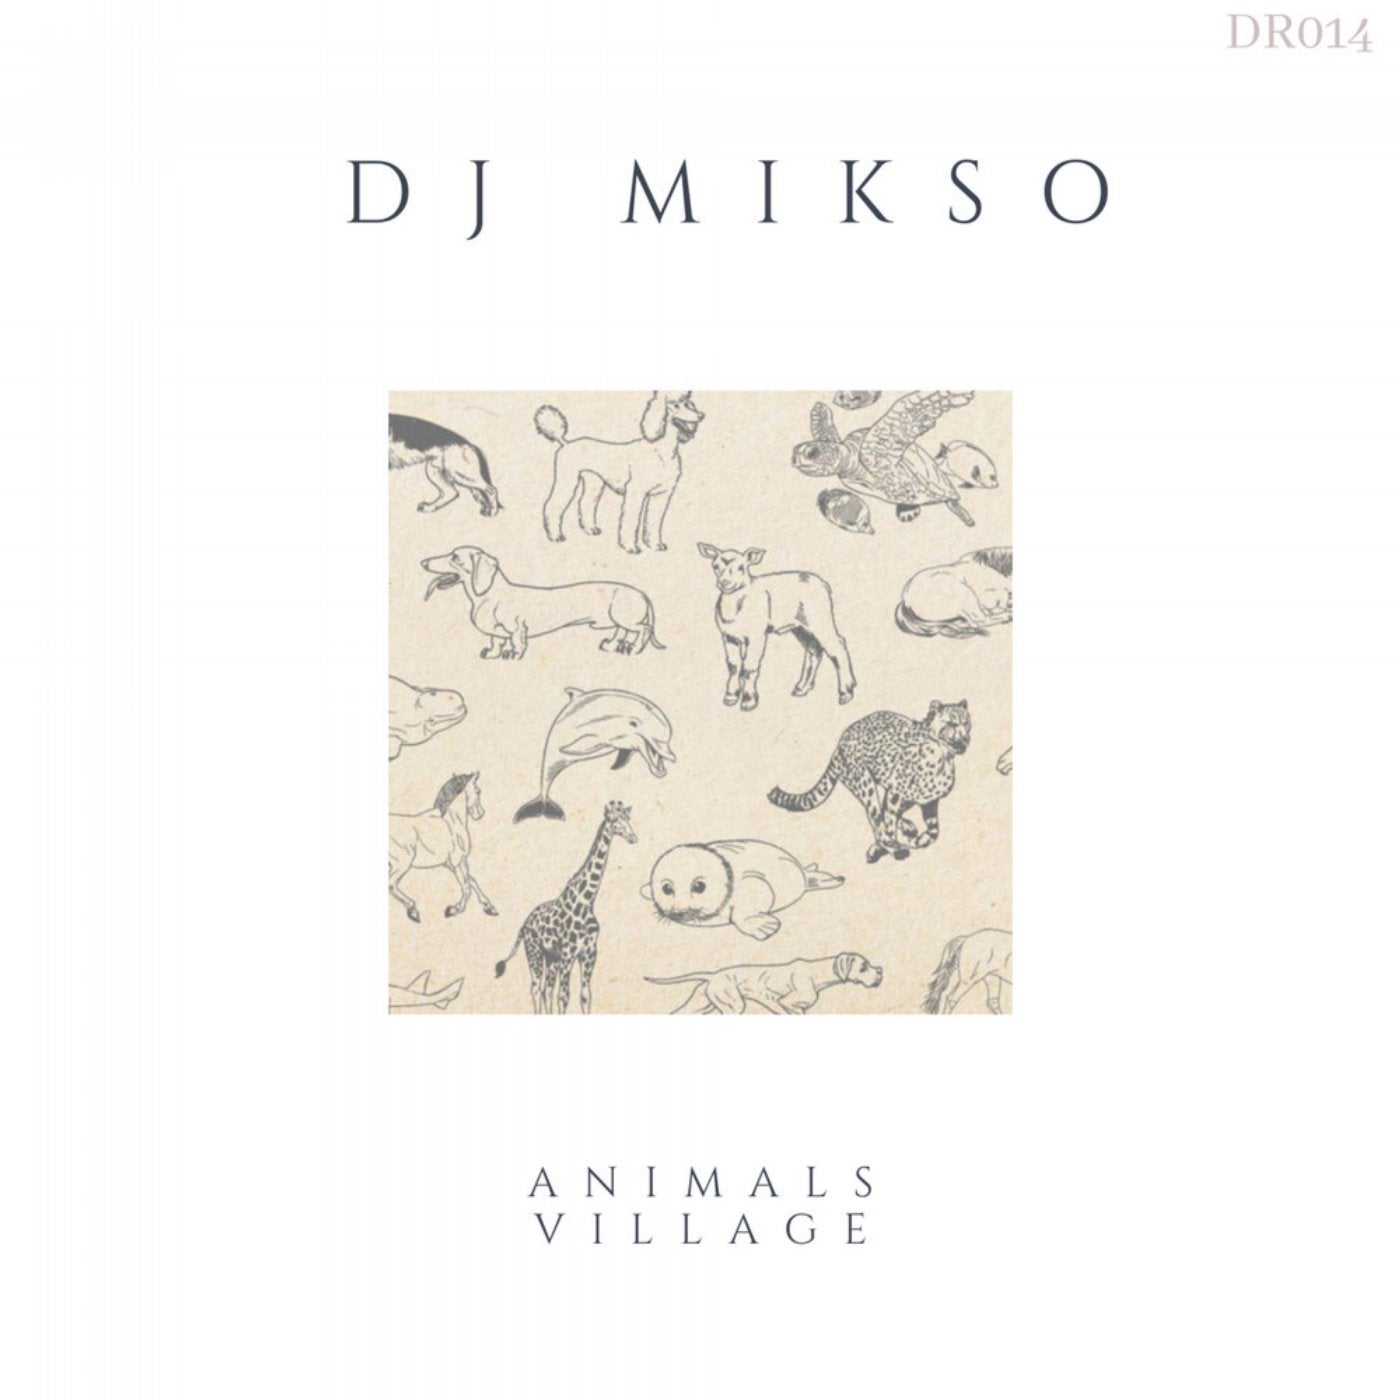 Animals village (Original Mix) by Dj Mikso on Beatport